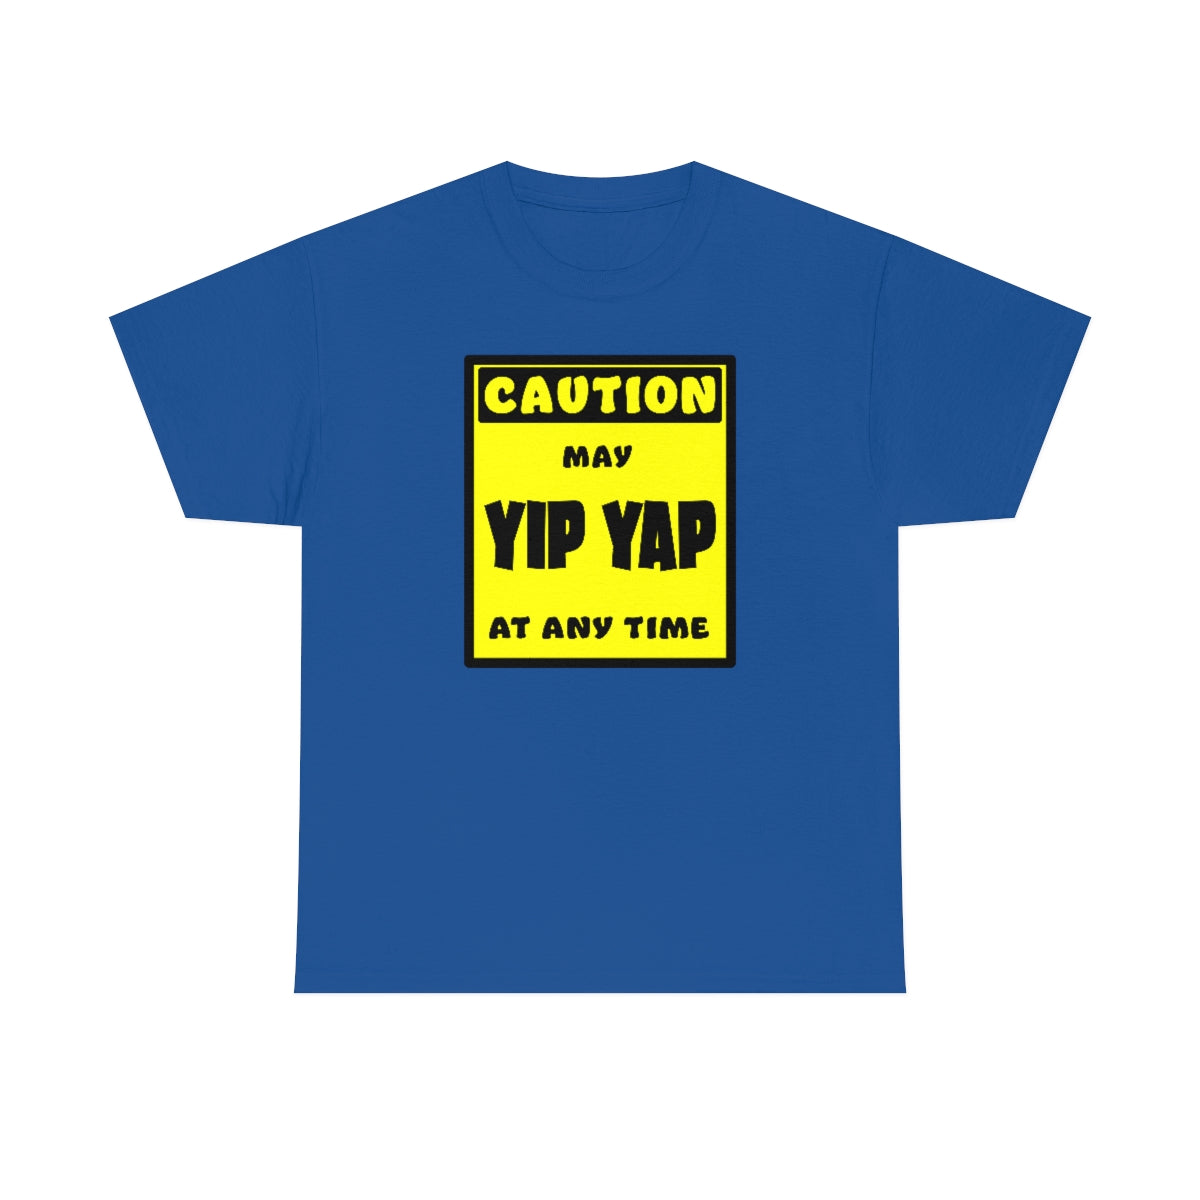 CAUTION! May Yip Yap at any time! - T-Shirt T-Shirt AFLT-Whootorca Royal Blue S 